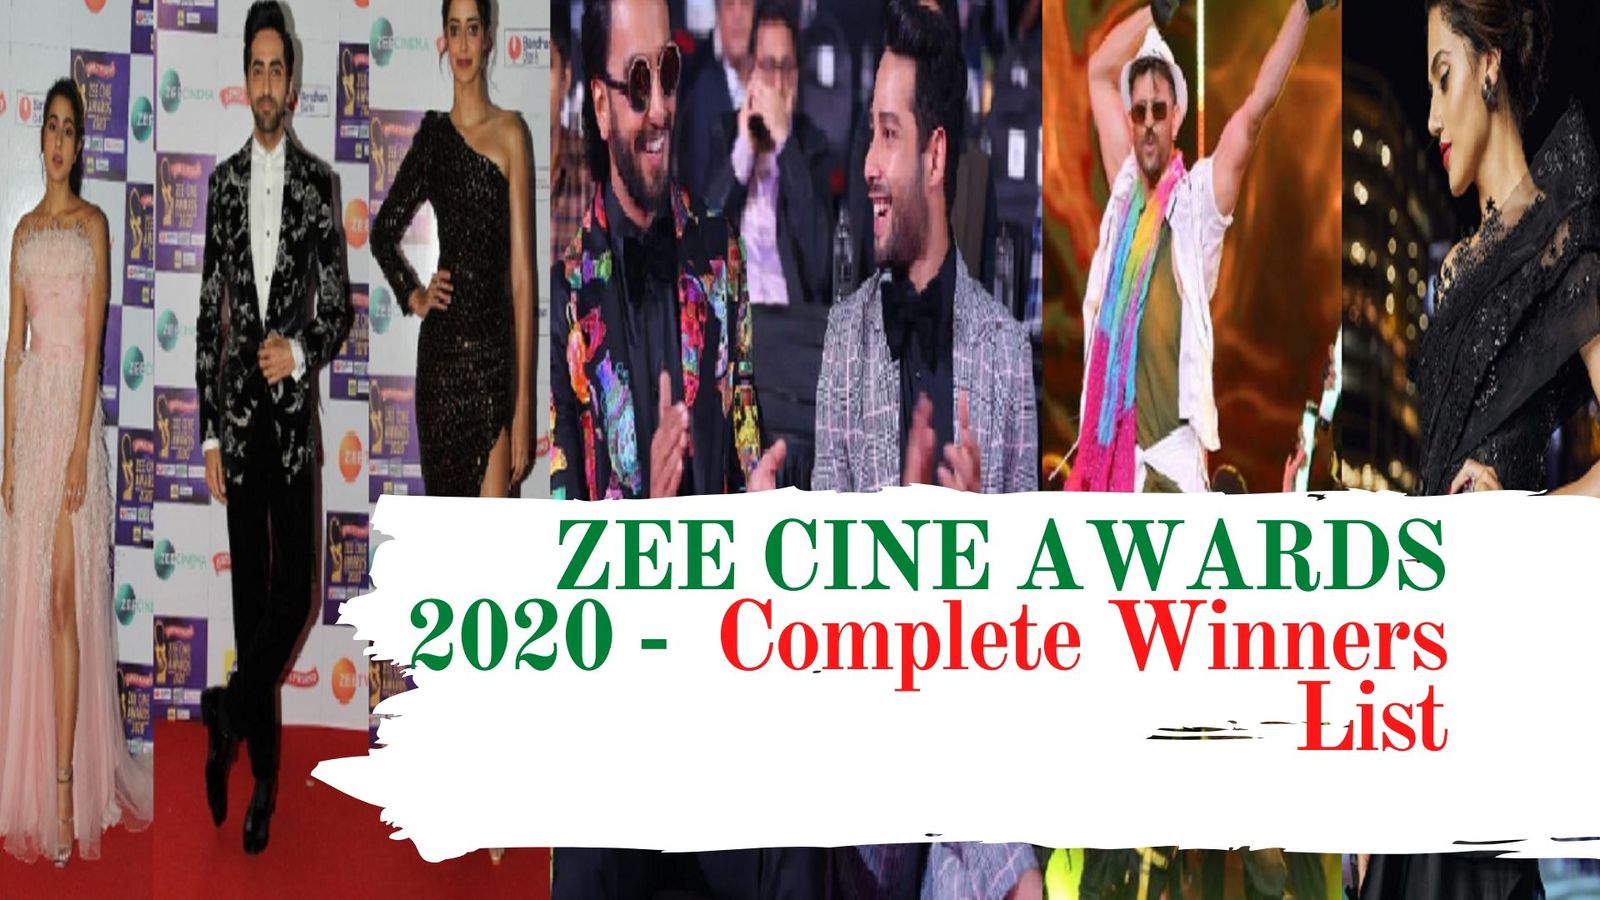 ZEE CINE AWARDS 2020: Here is The Complete Winners List